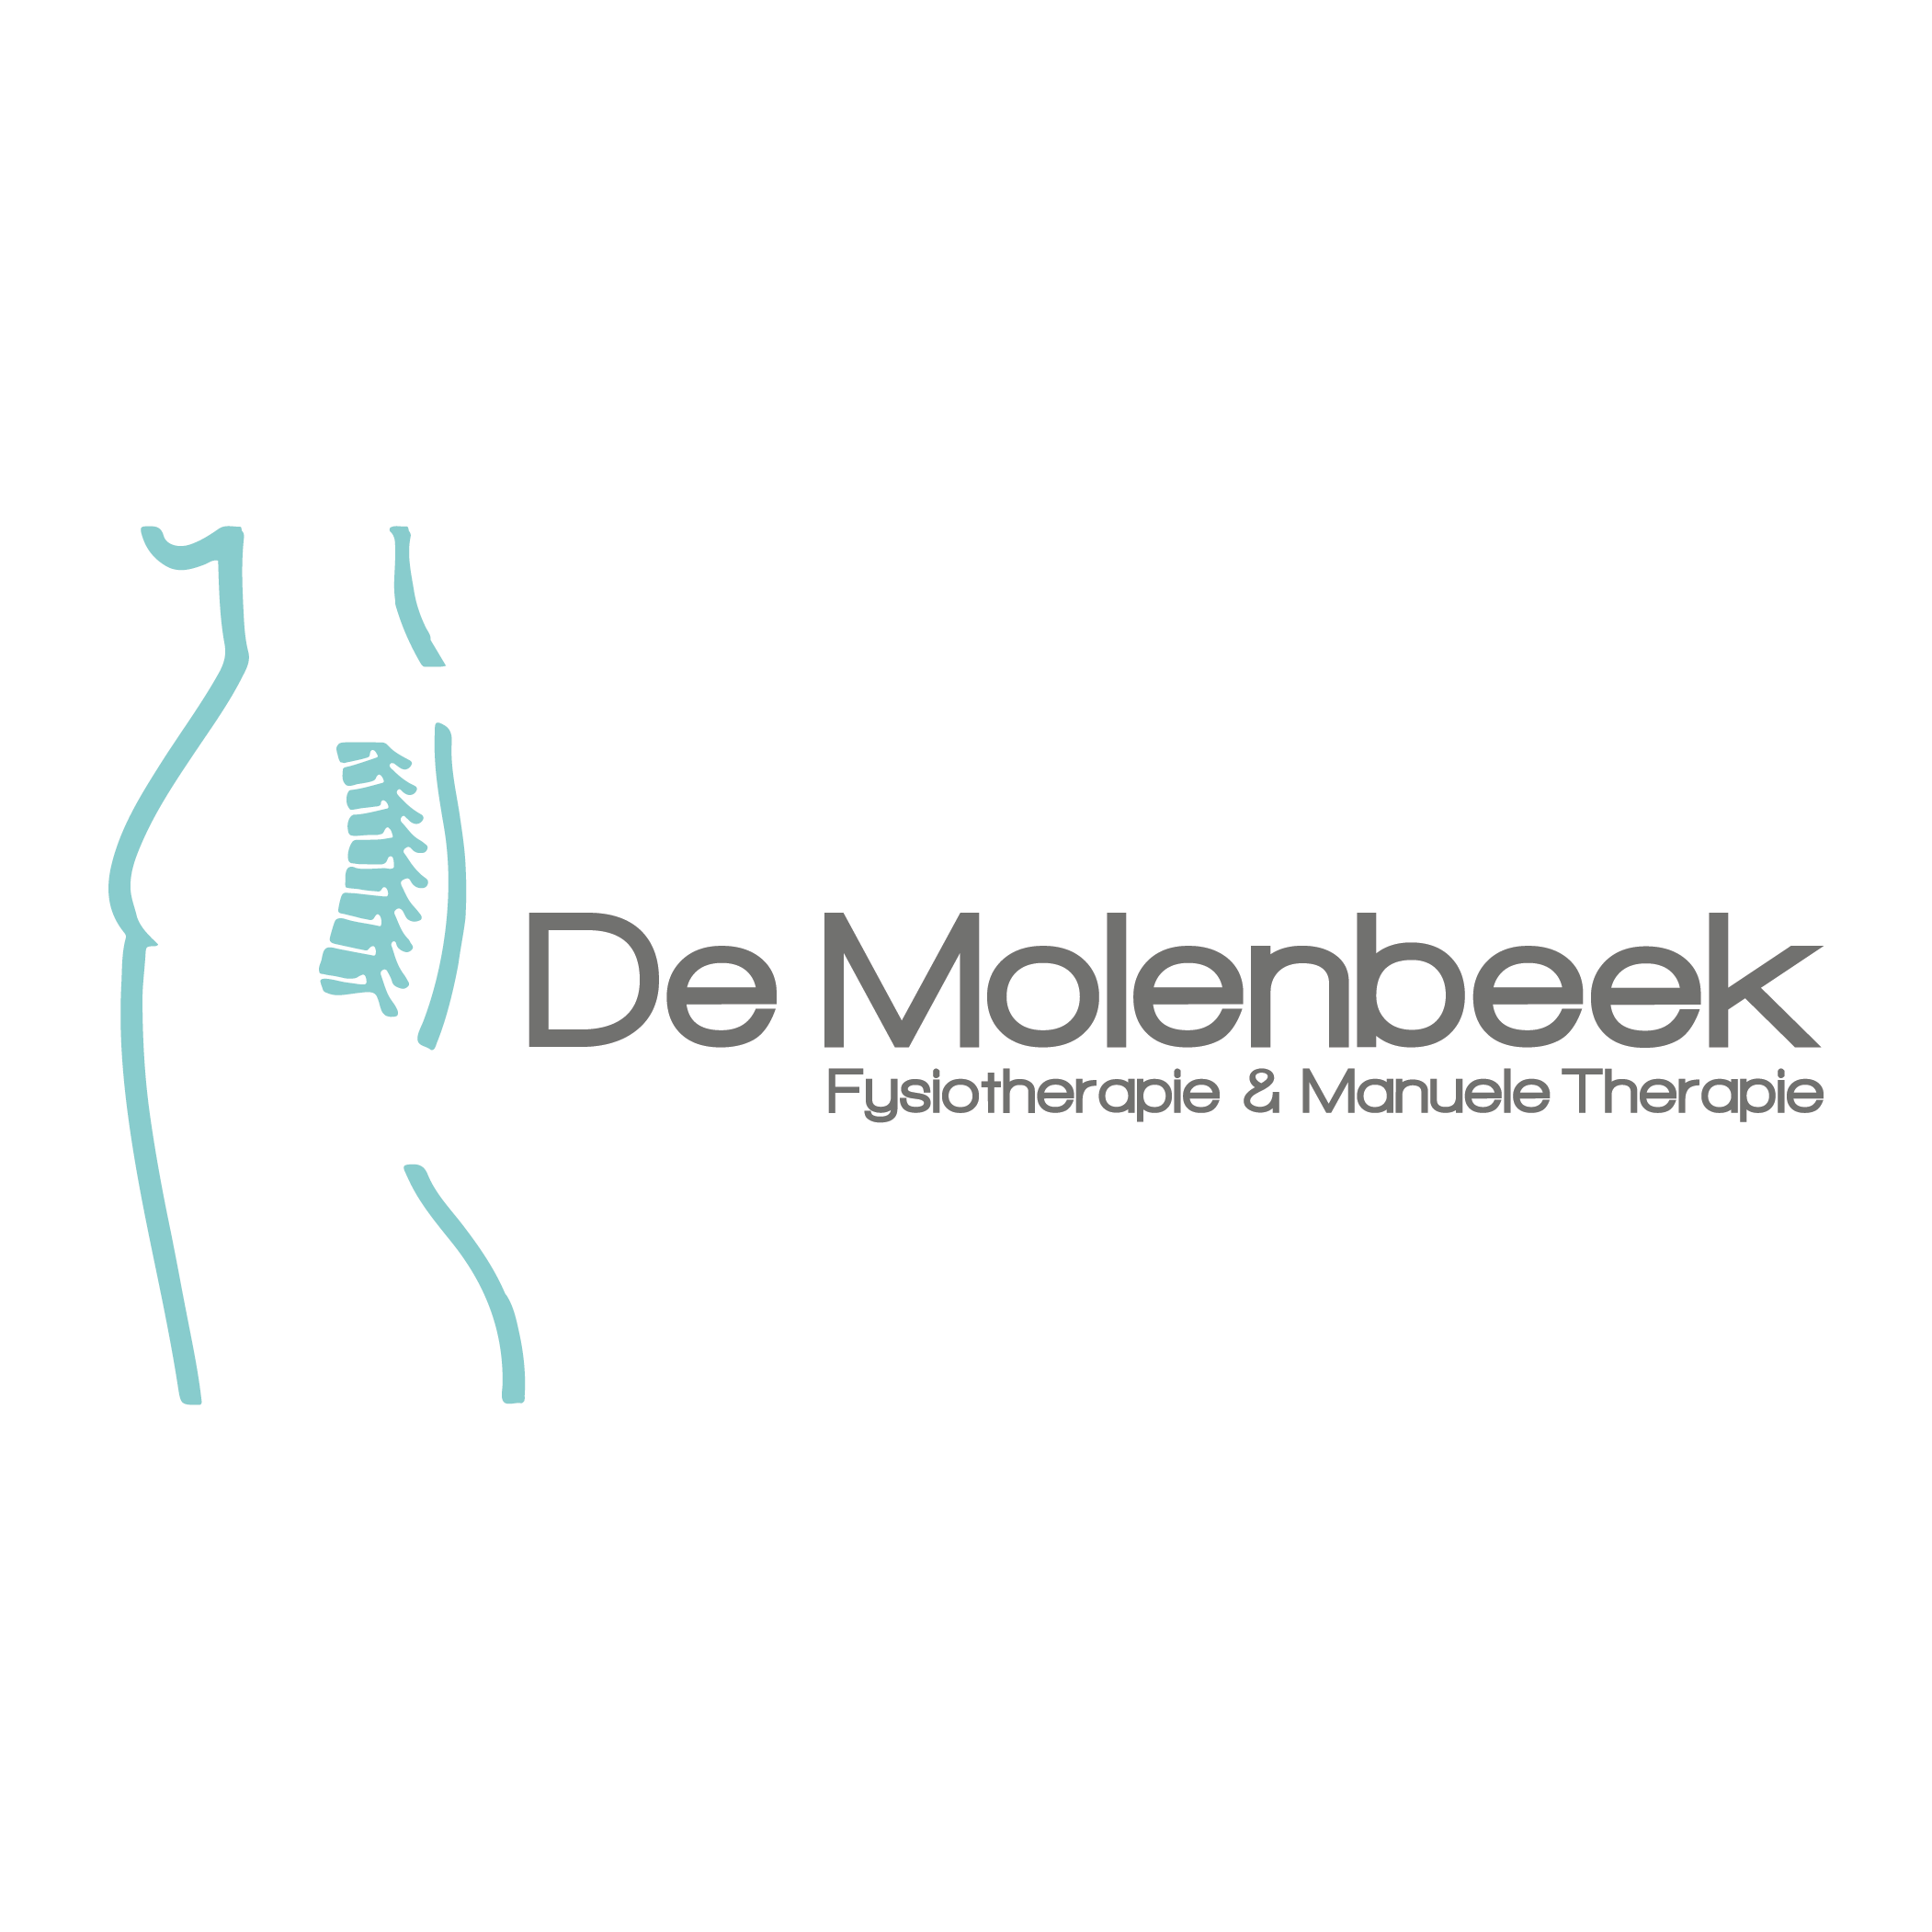 Fysiotherapie & Manuele therapie "De Molenbeek" Logo